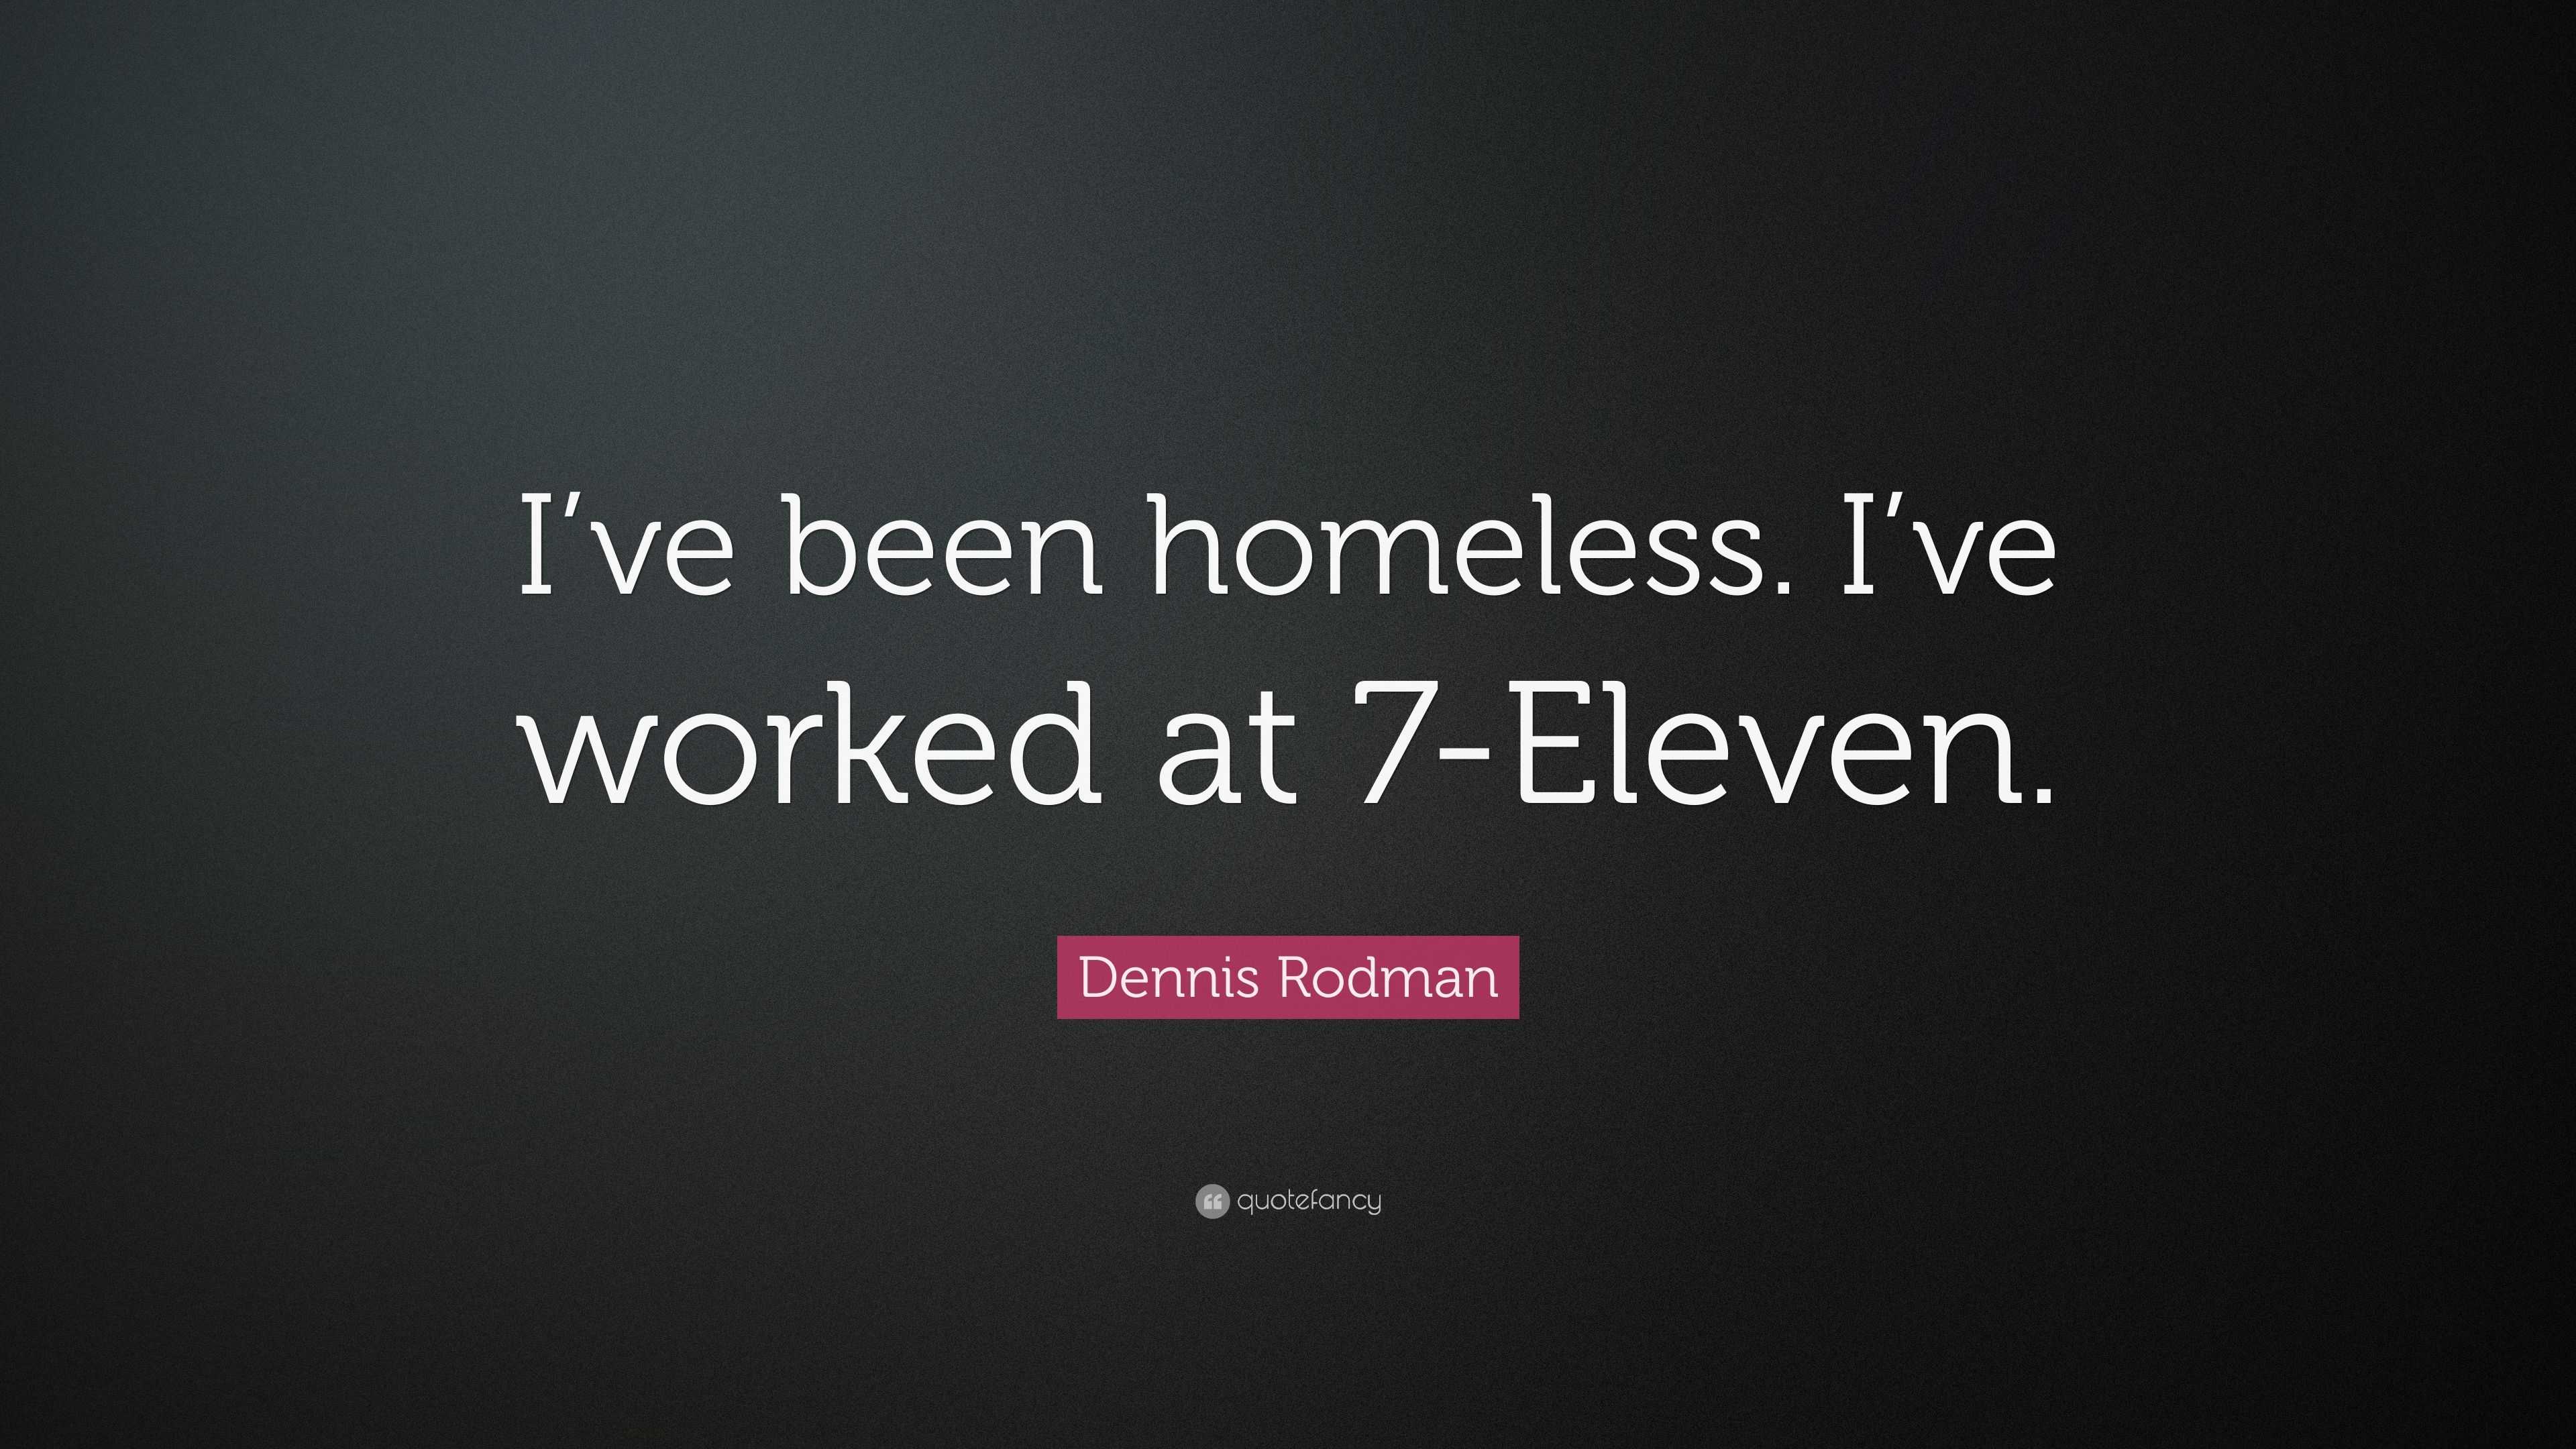 Dennis Rodman Quote: “I